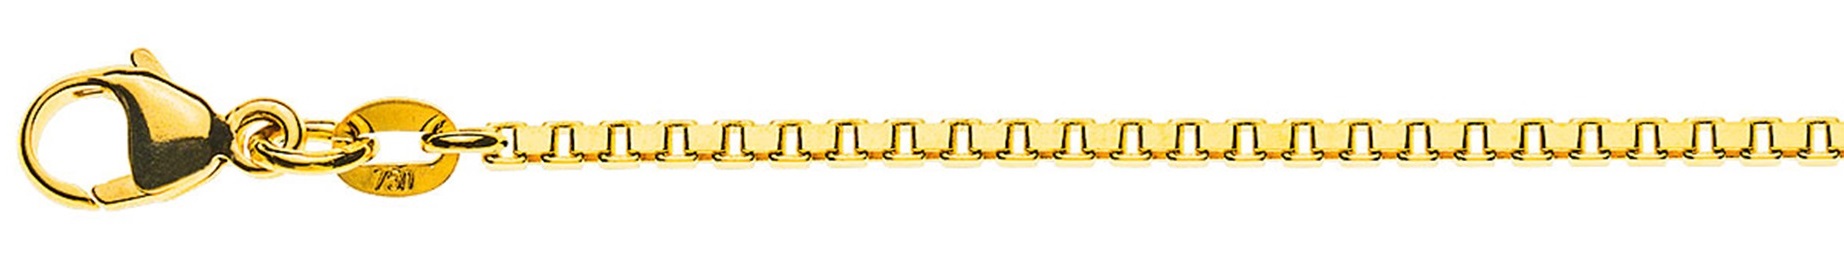 AURONOS Prestige Necklace yellow gold 18K Venetian chain diamond 40cm 1.6mm